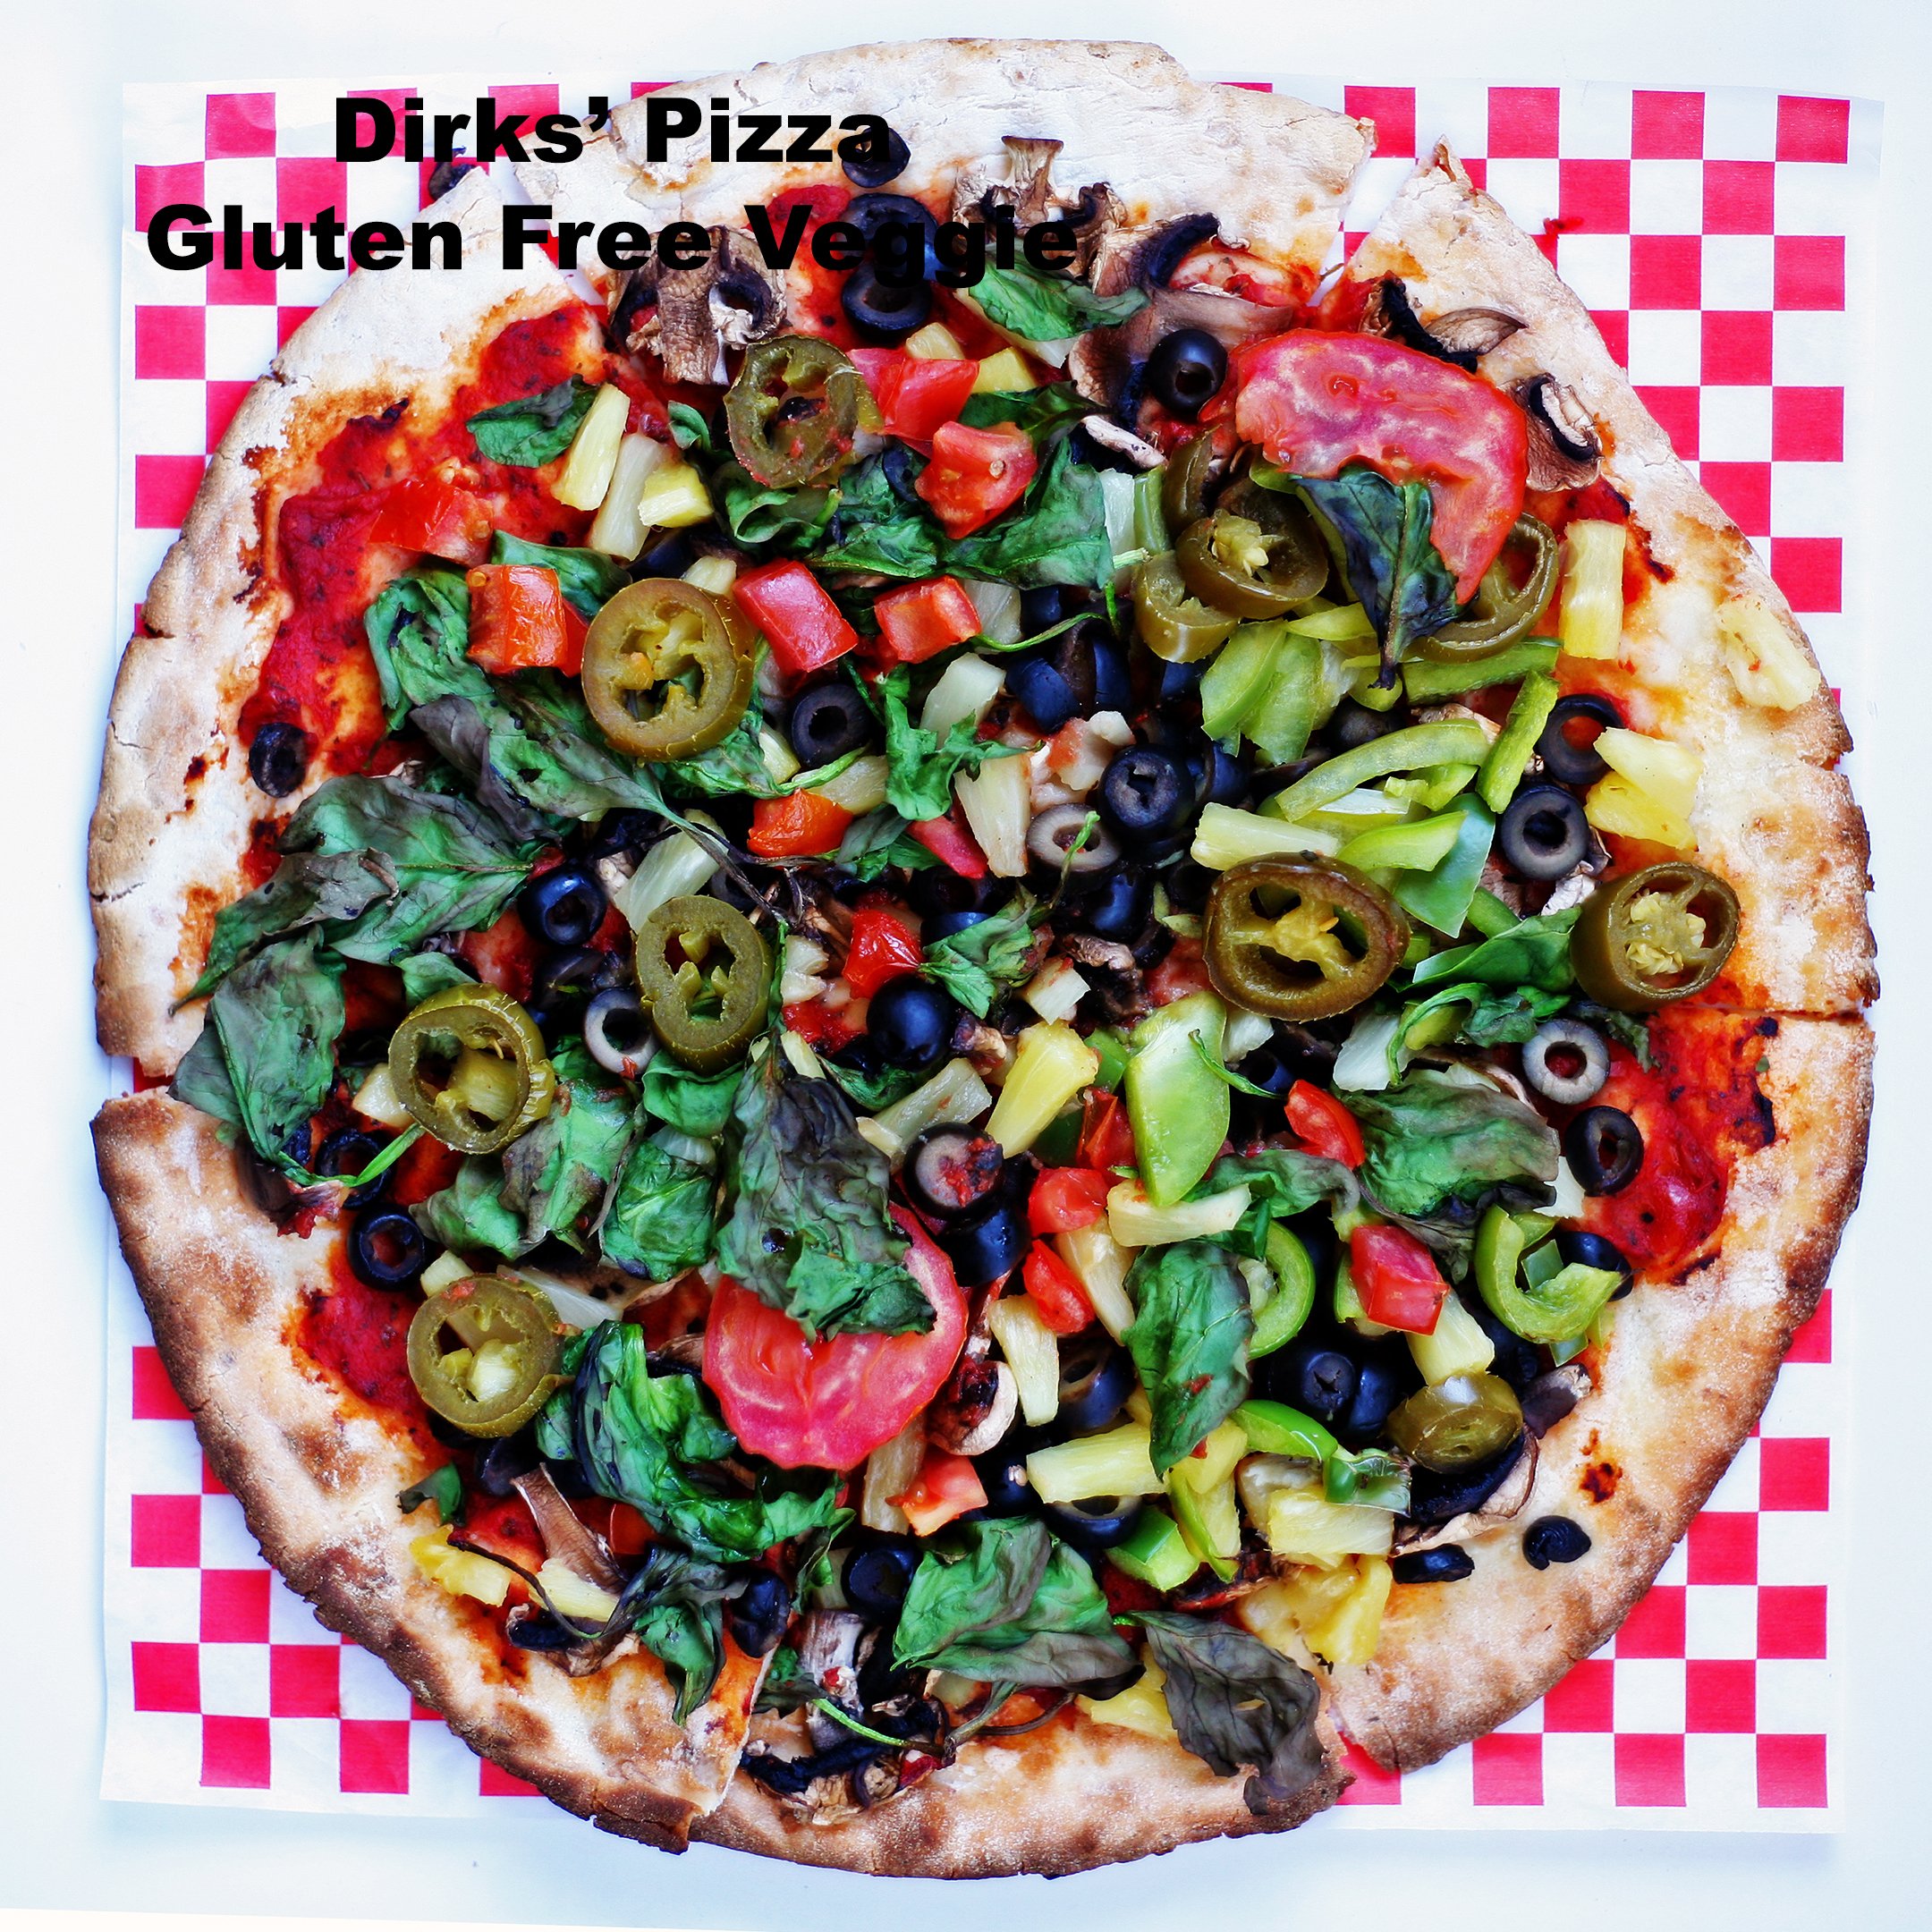 pizza dirks gluten free.jpg